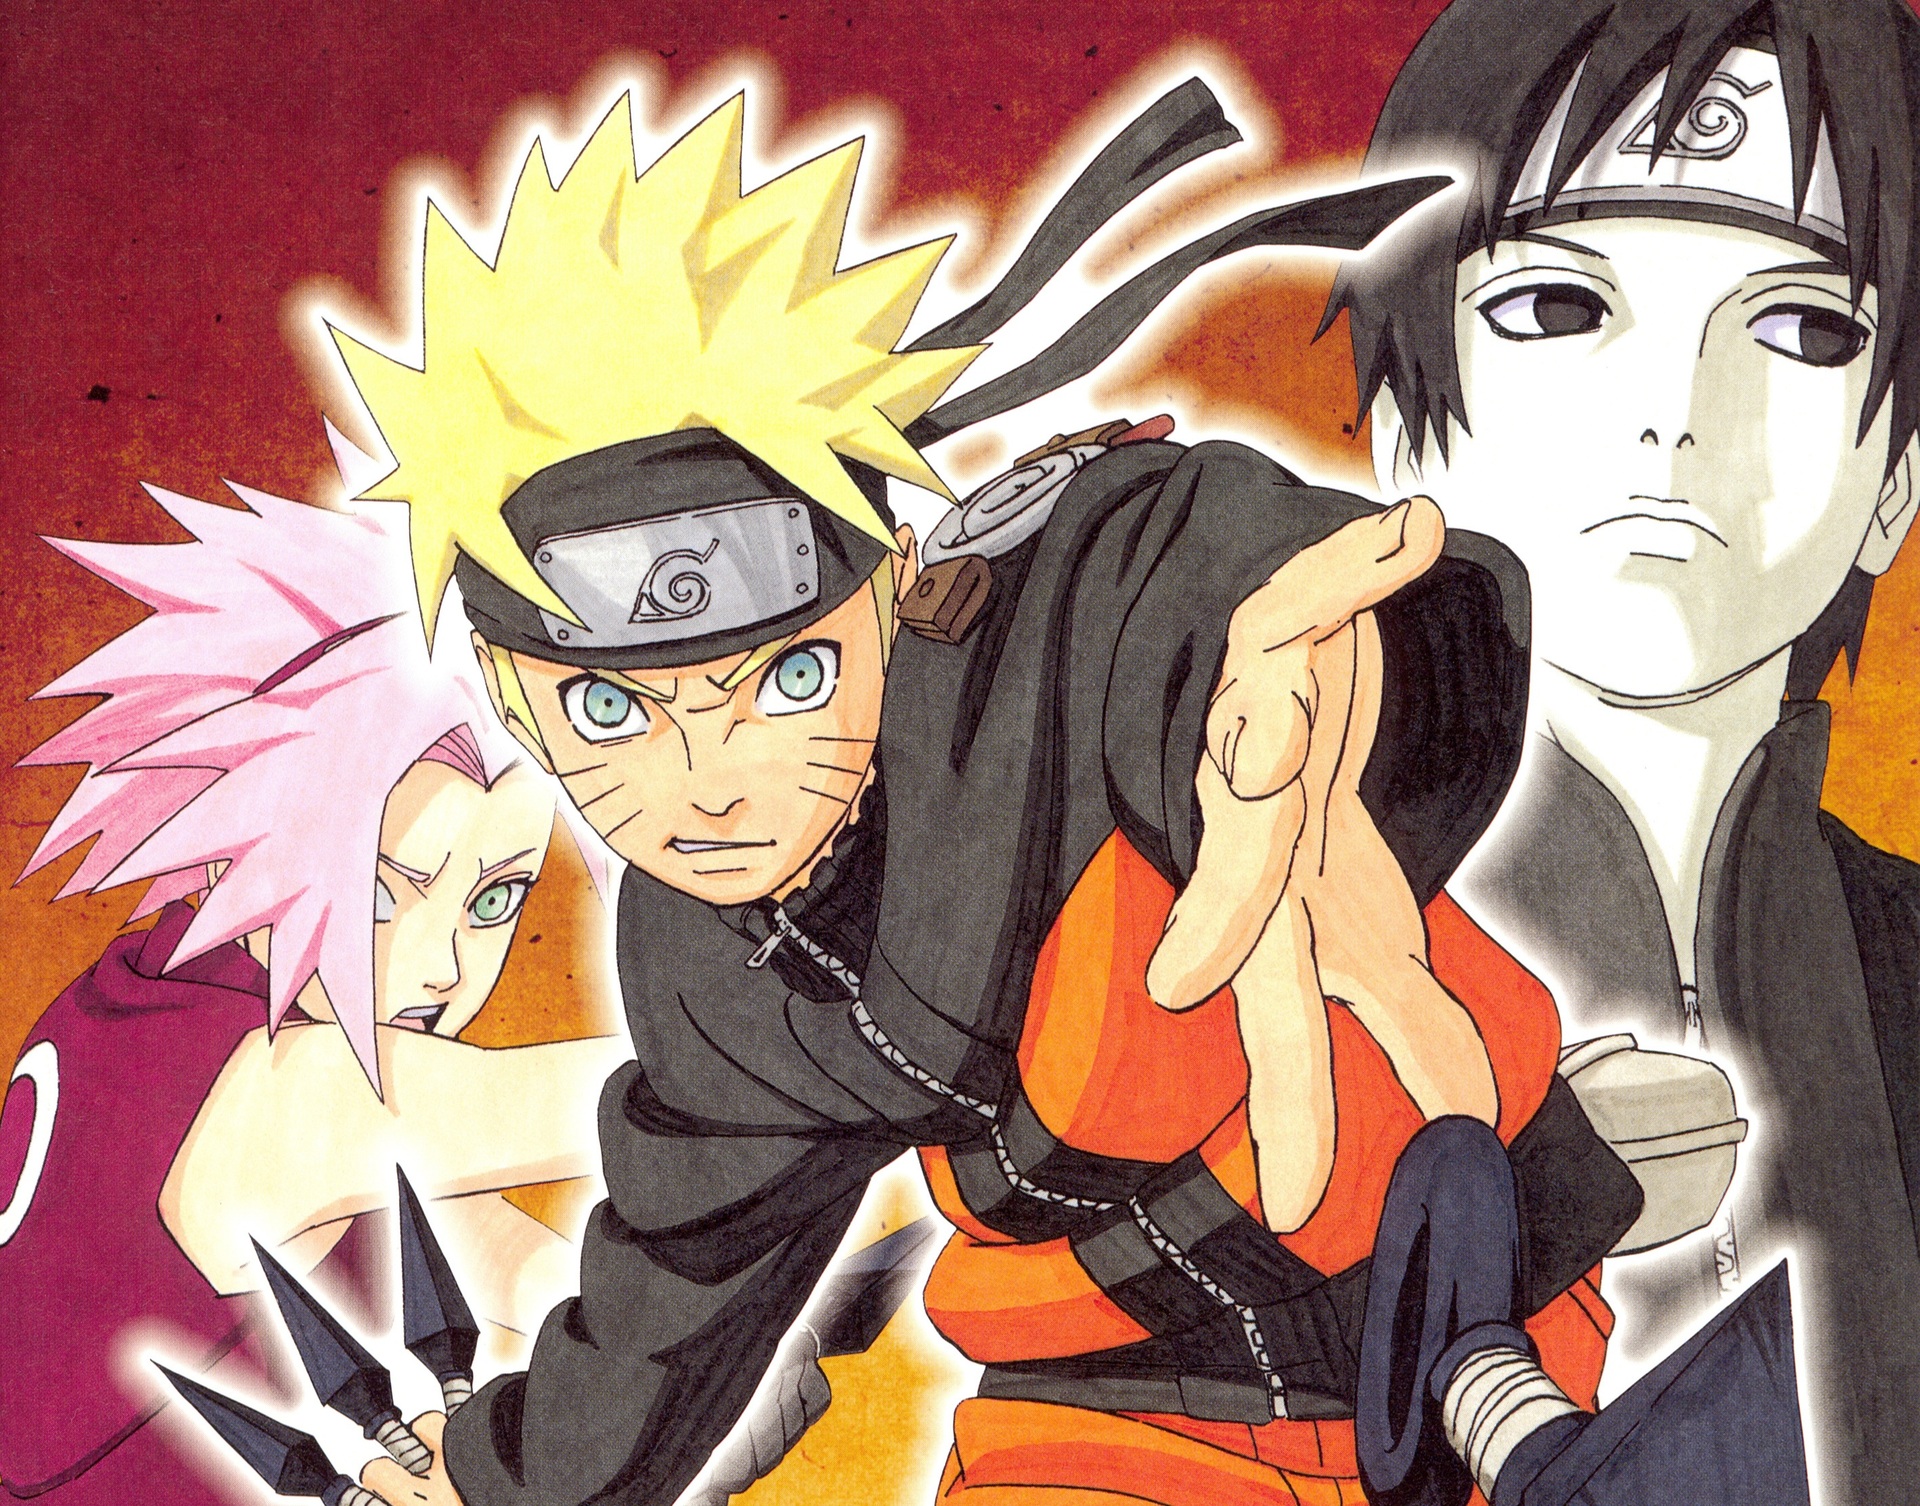 Descarga gratis la imagen Naruto, Animado, Sakura Haruno, Naruto Uzumaki, Sai (Naruto) en el escritorio de tu PC